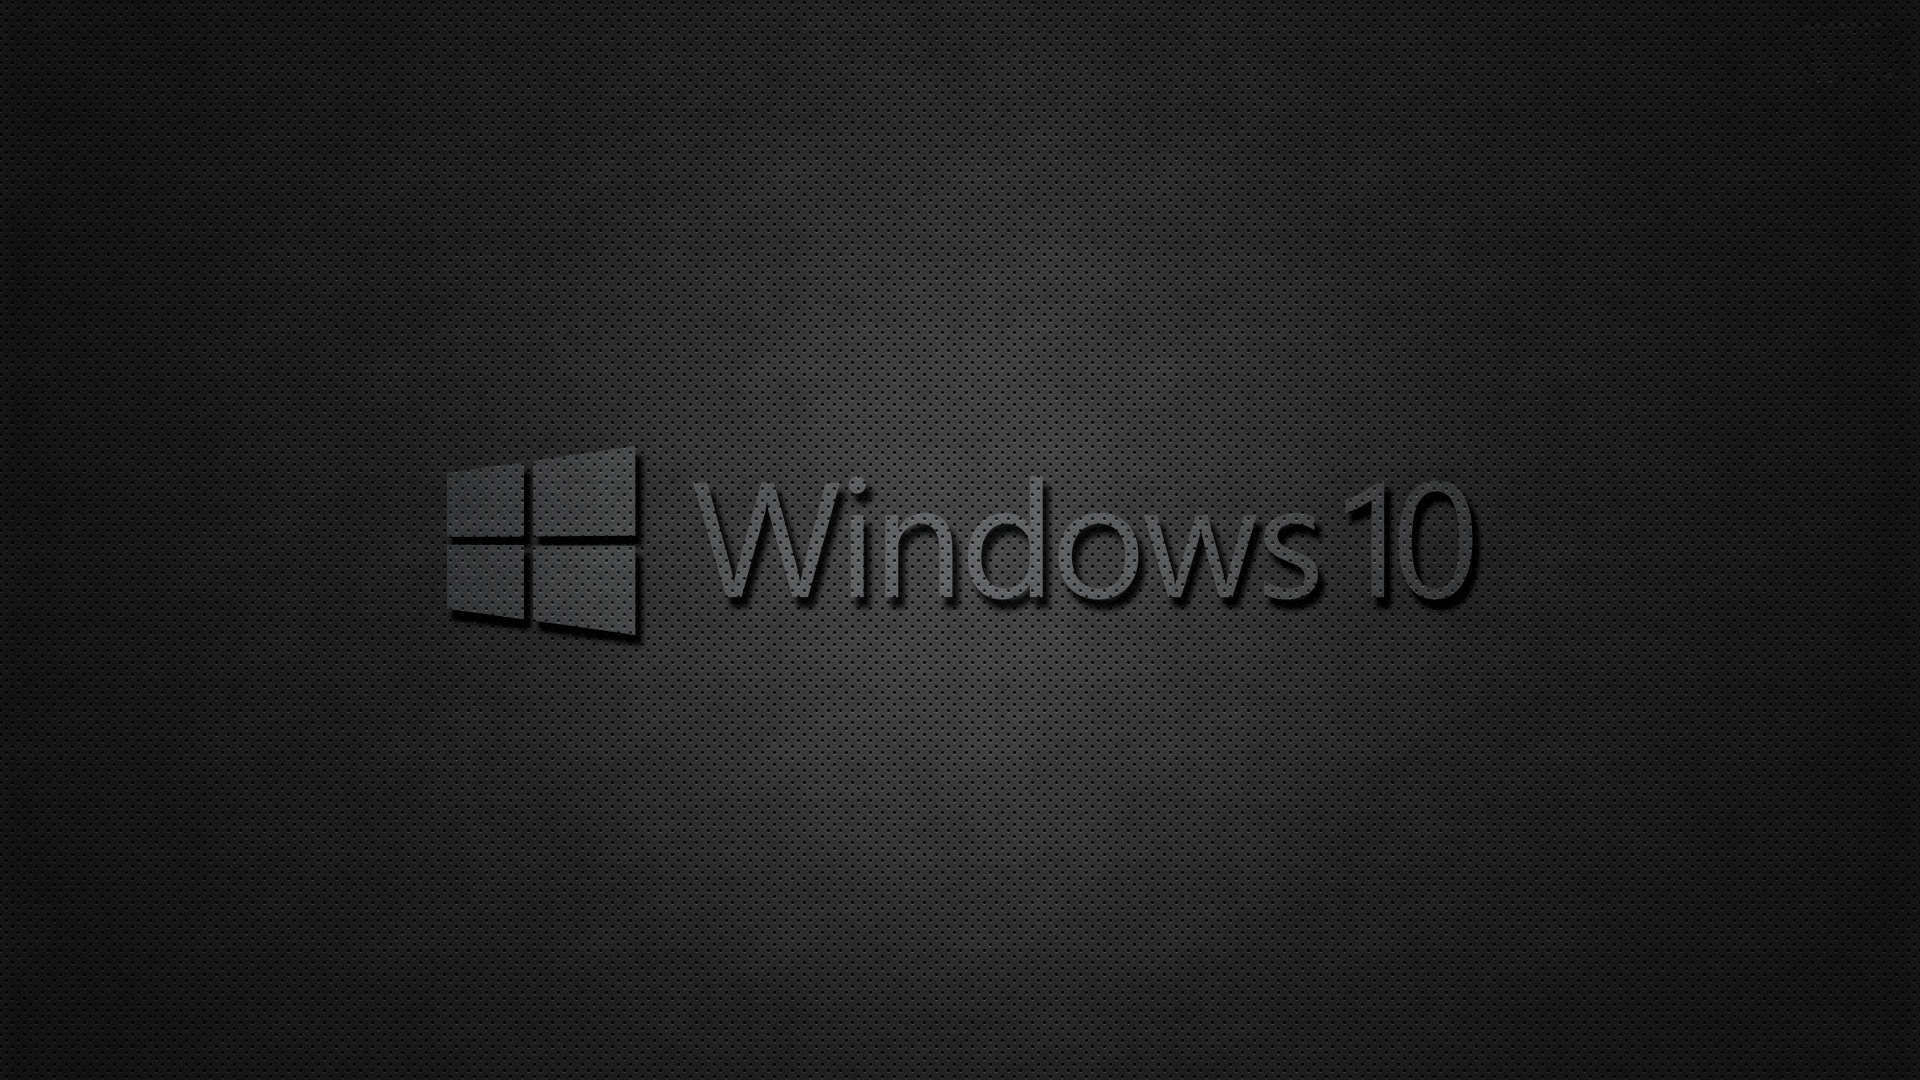 Black Hd Wallpaper For Windows 10 - Black Windows 10 Wallpaper Hd ...